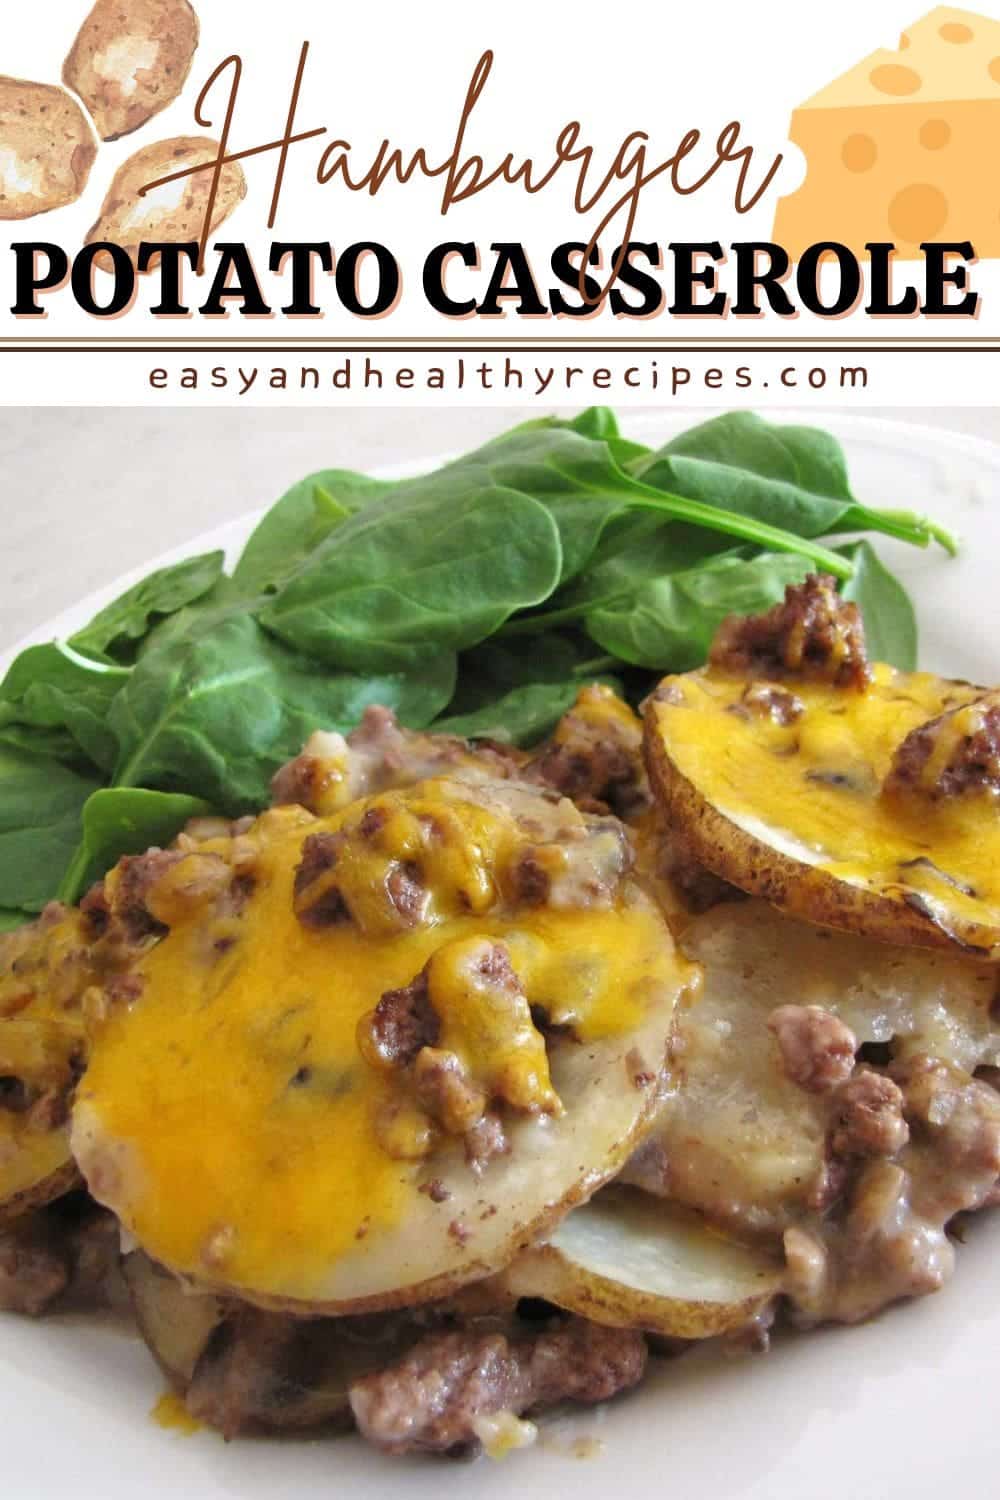 Hamburger Potato Casserole